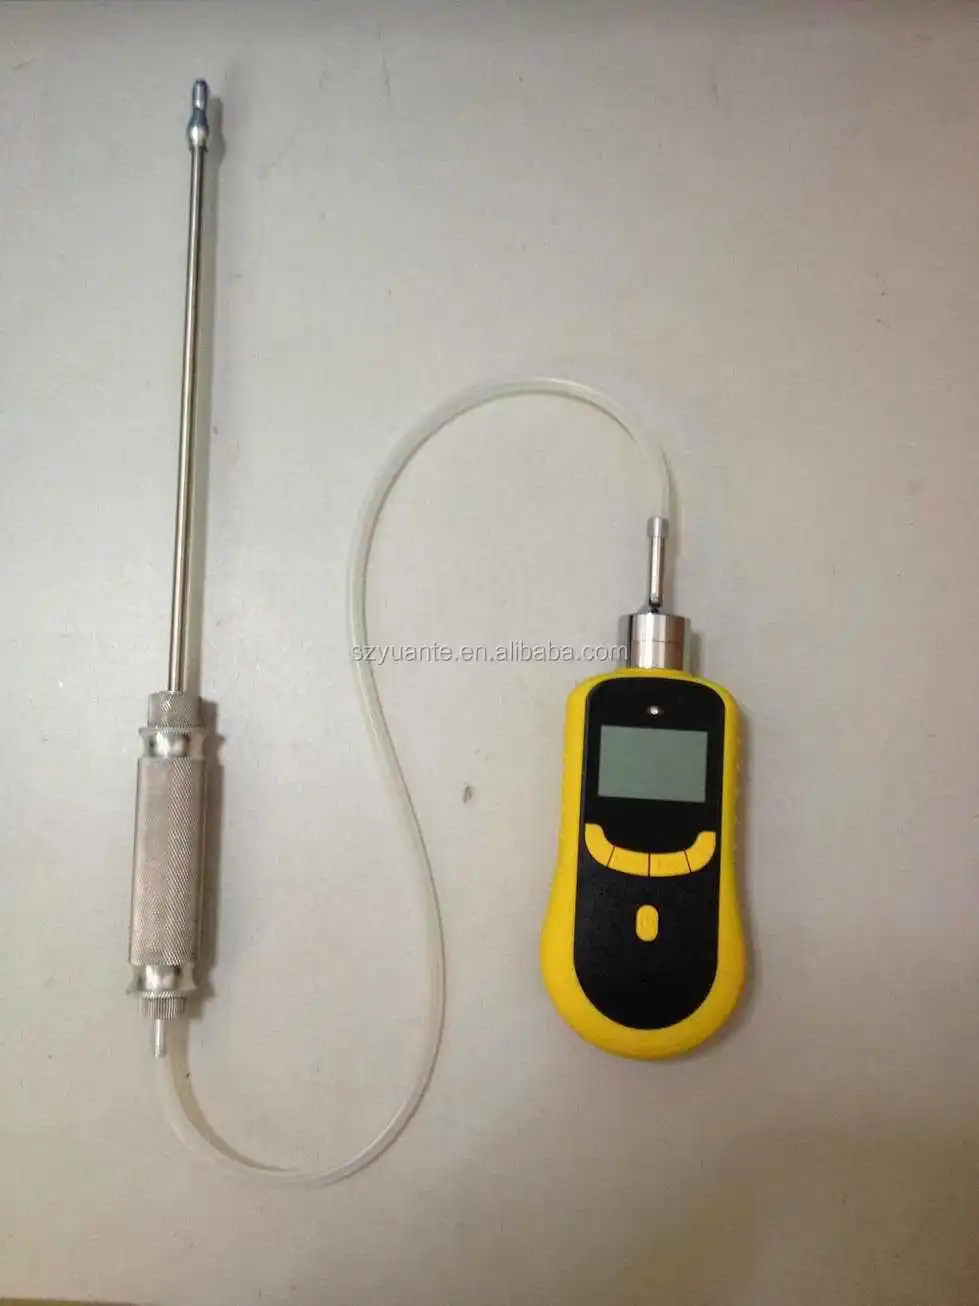 
Portable built-in sampling pump ozone gas o3 meter 